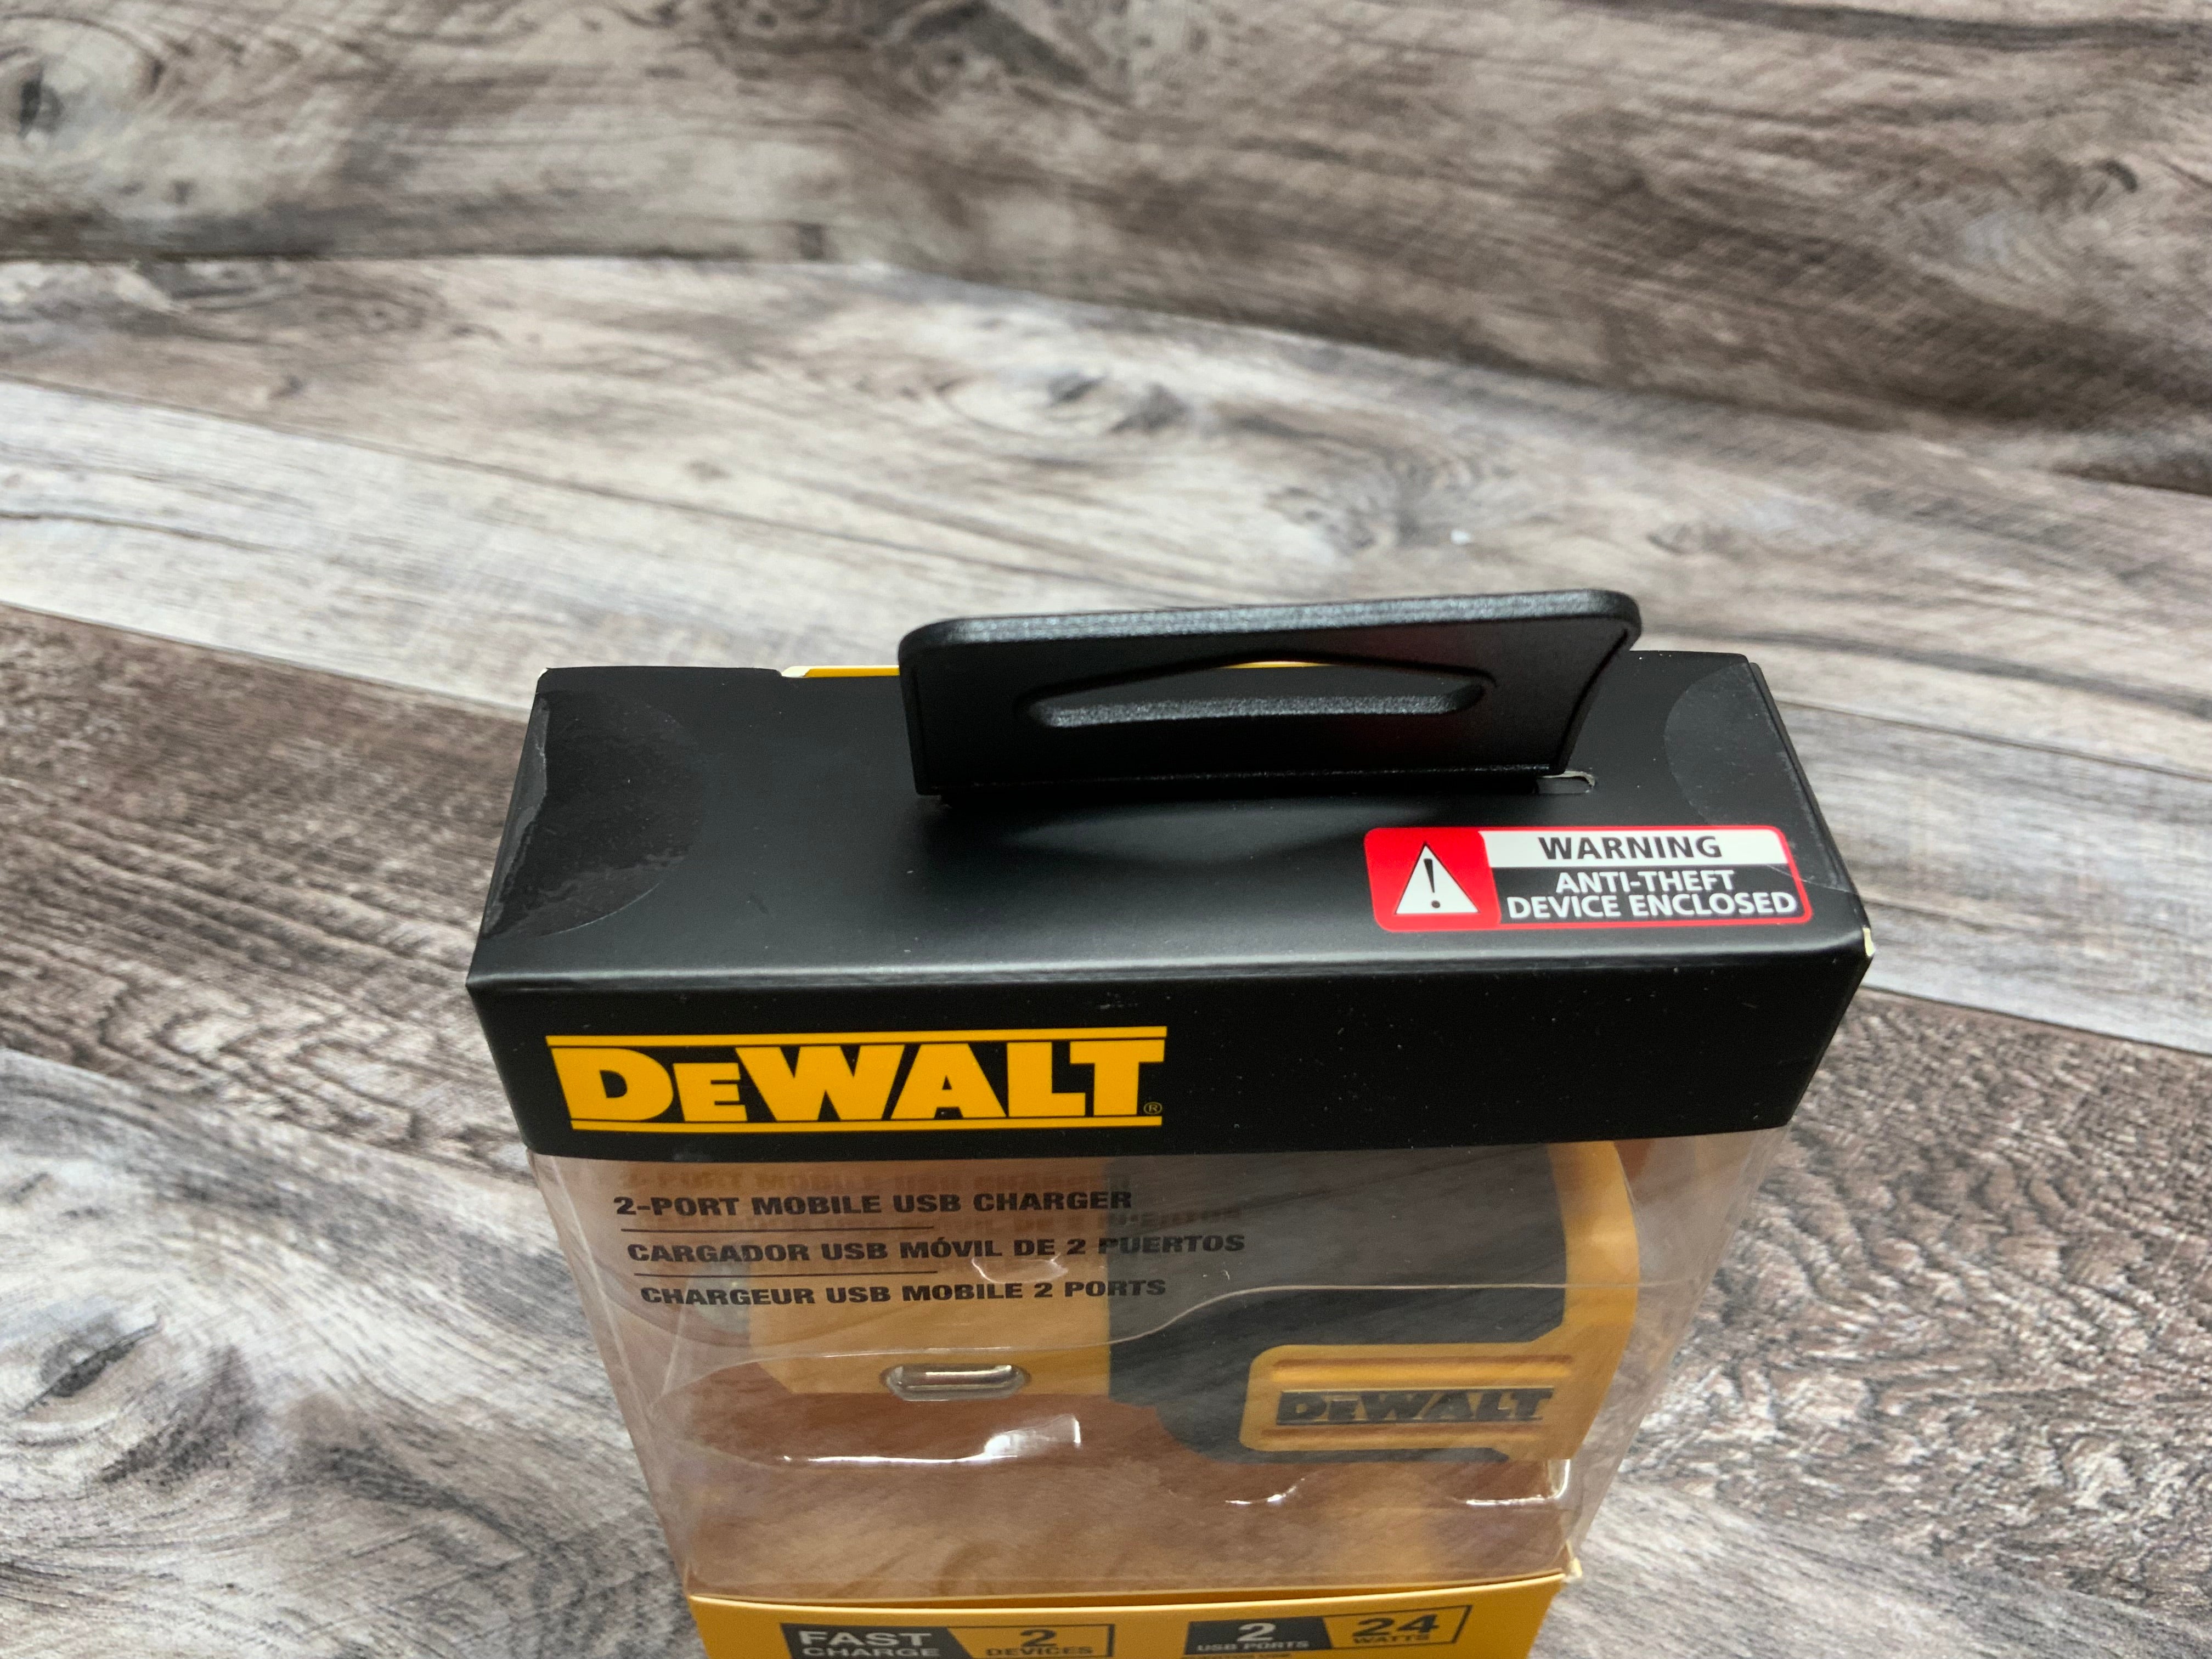 DEWALT 2-Port USB Car Charger — 24W Fast Charge Dual Port USB-A (DXMA1419008) (8171747770606)